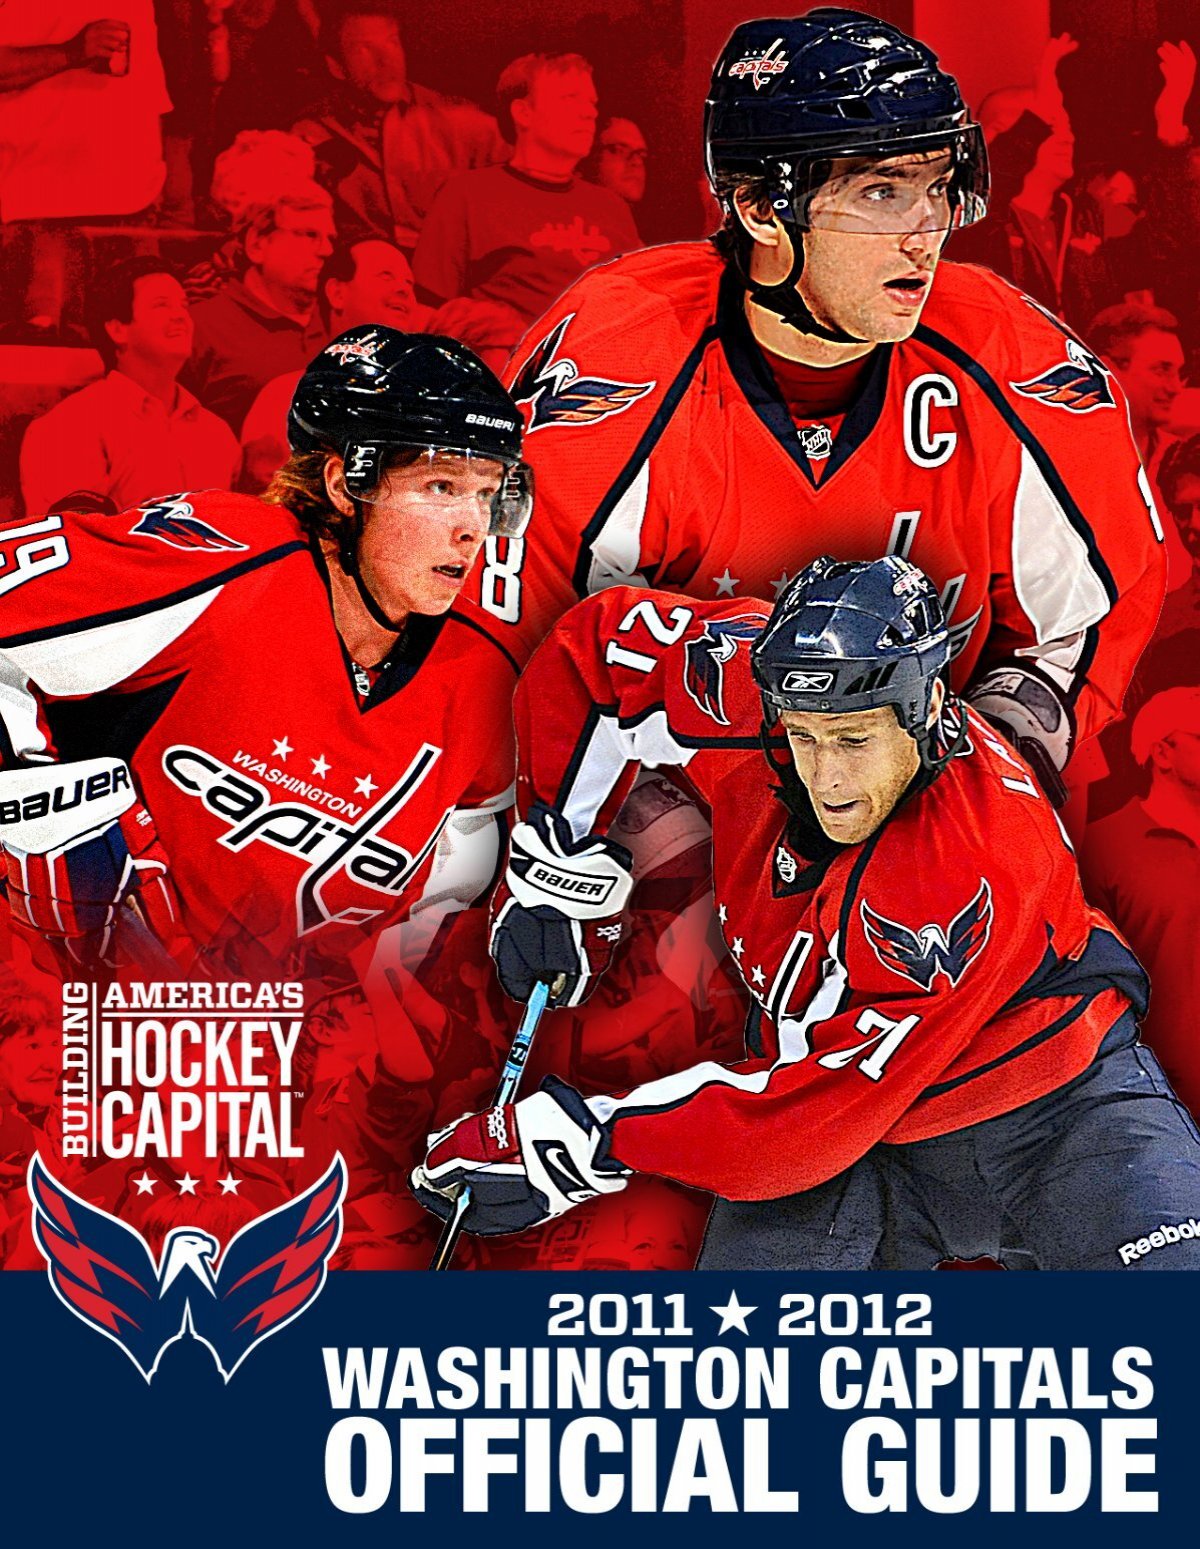 Download NHL Star, Alex Ovechkin, in Washington Capitals Uniform Wallpaper